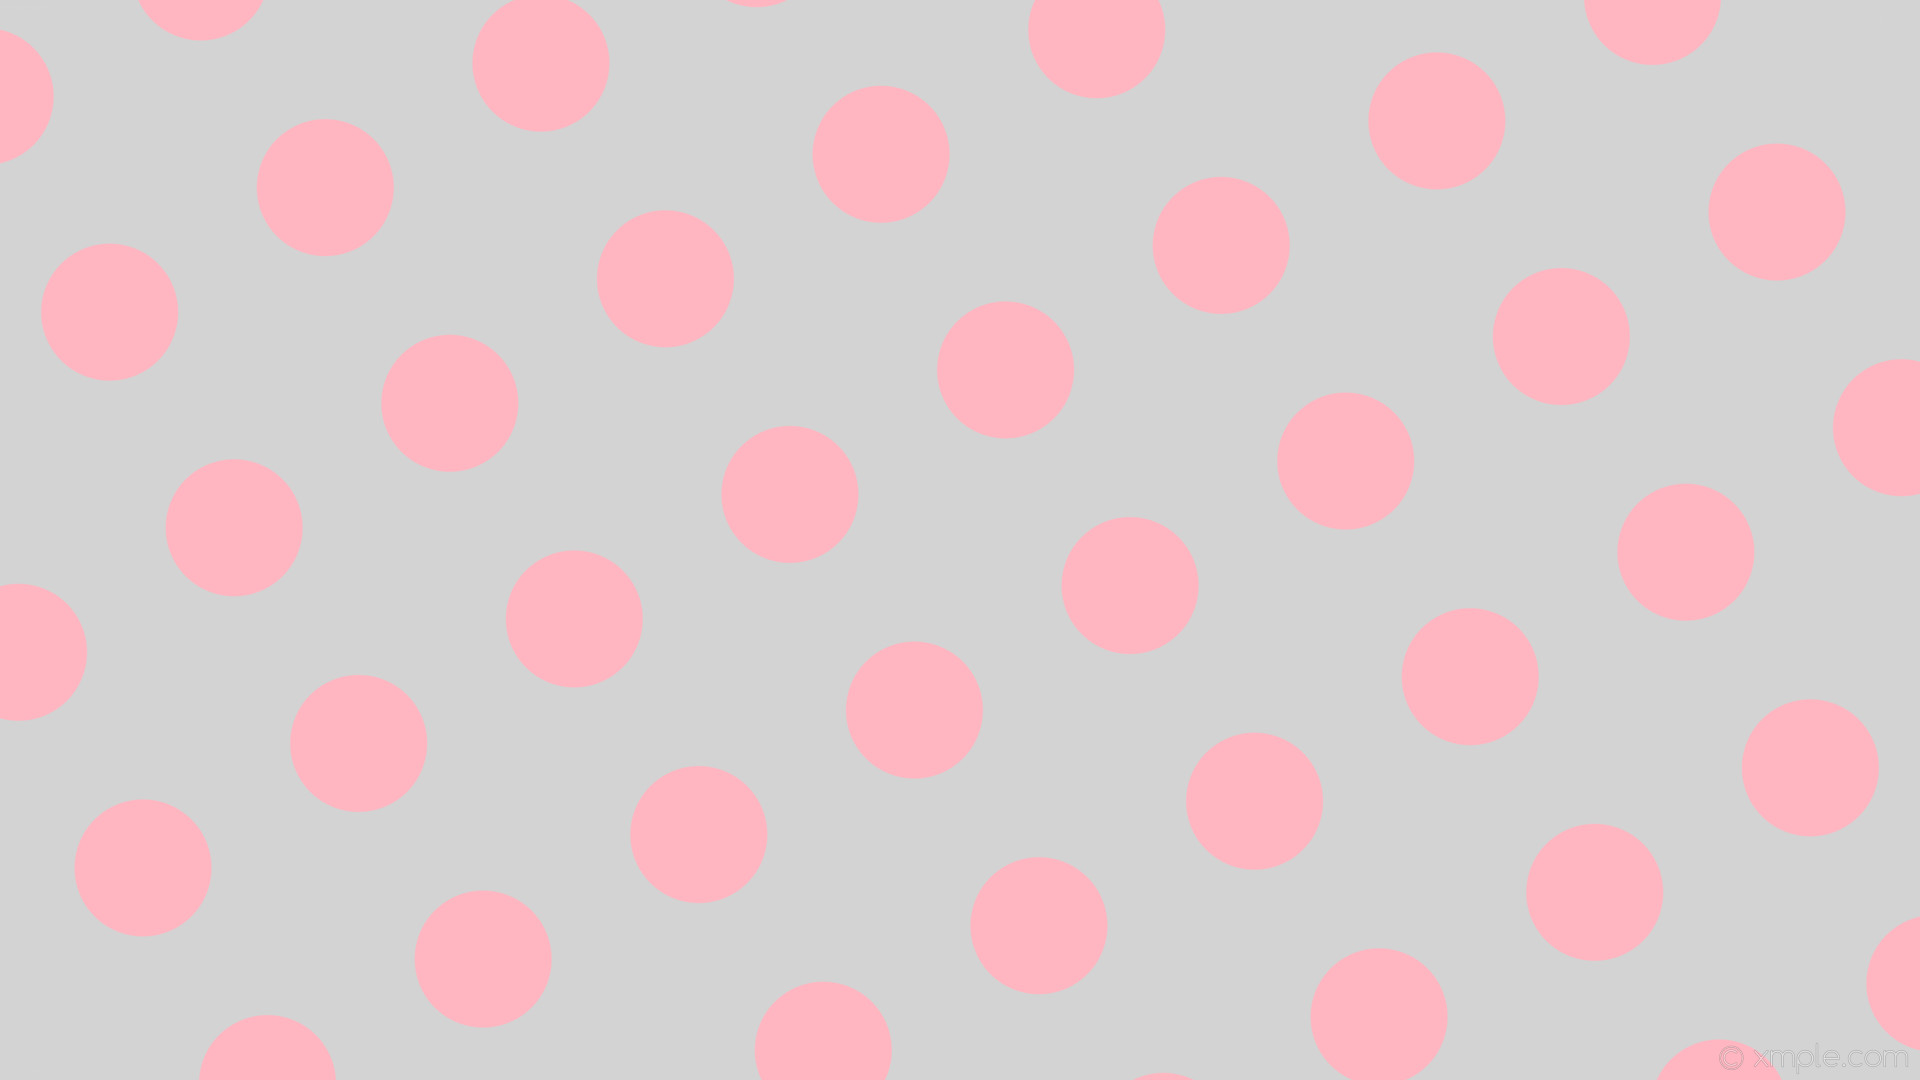 1920x1080 wallpaper pink dots spots polka grey light gray light pink #d3d3d3 #ffb6c1  300Â°